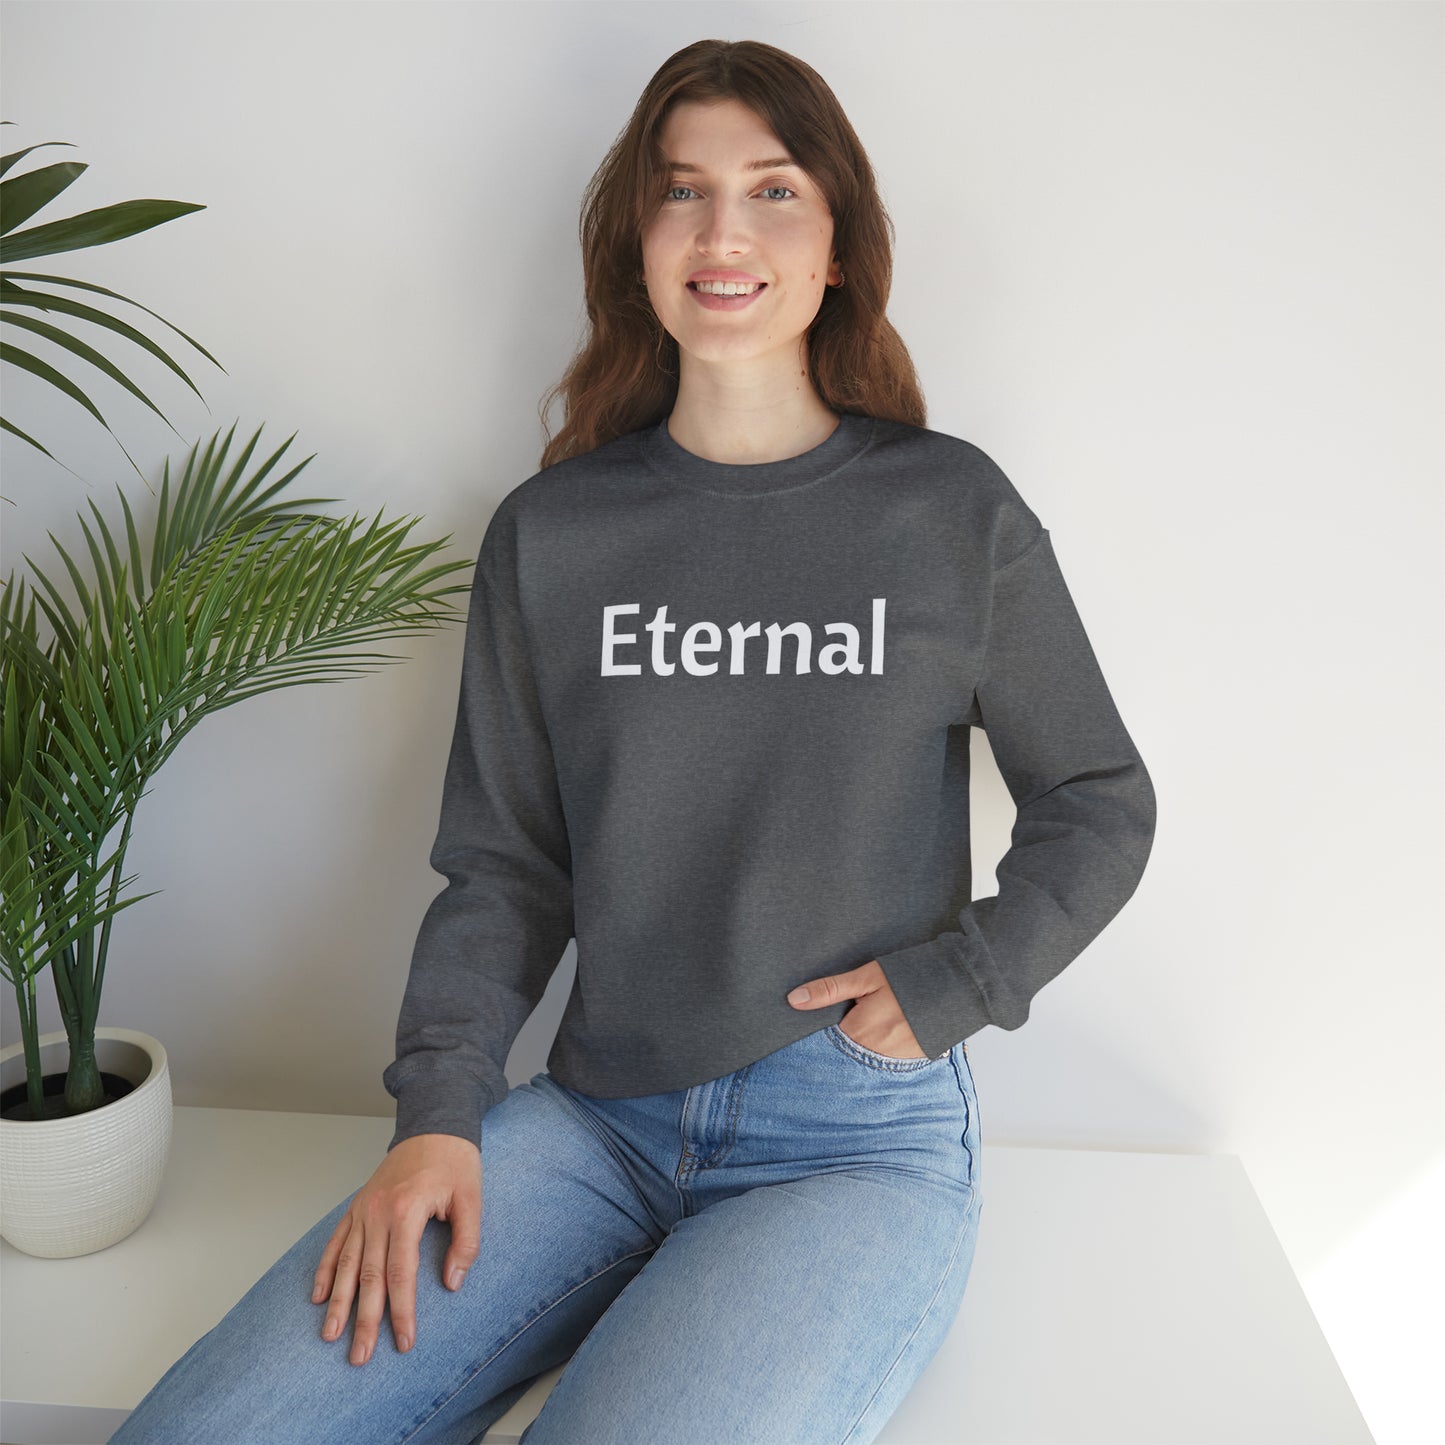 Eternal Sweatshirt